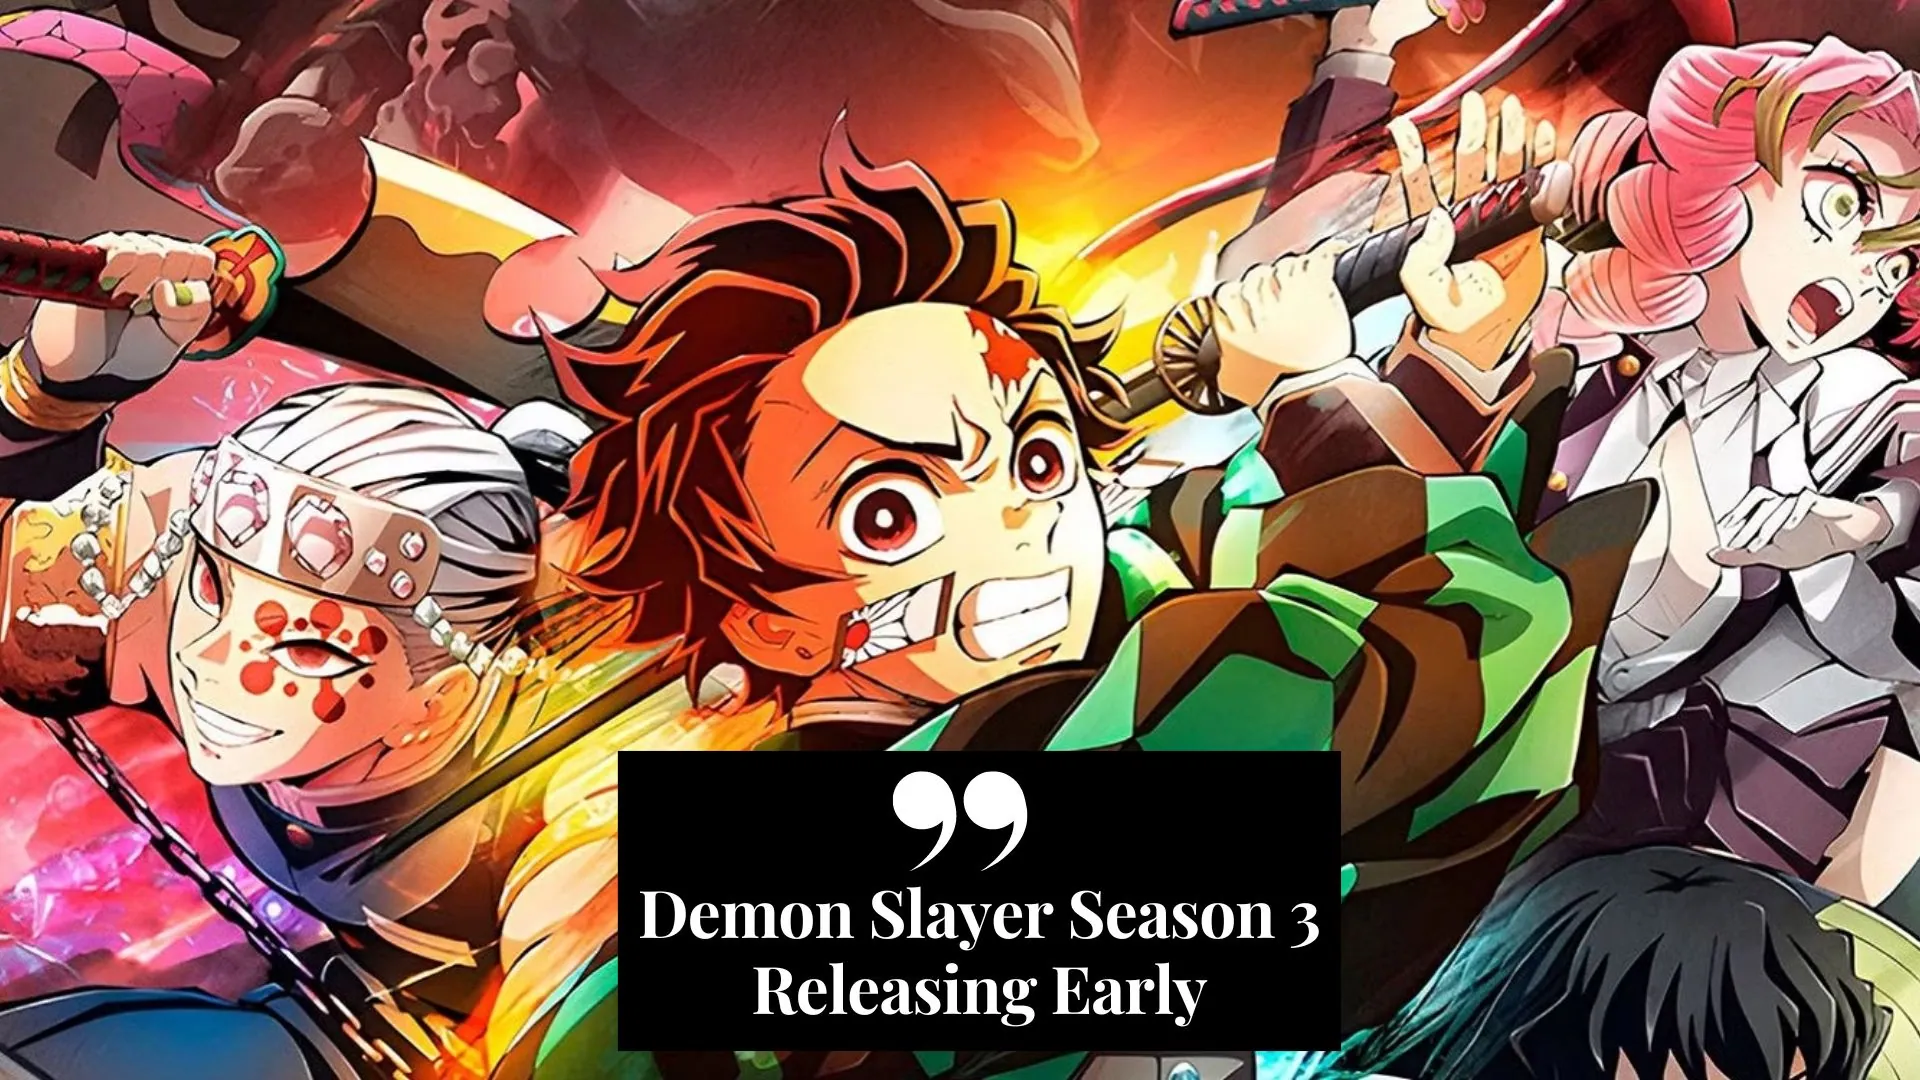 Demon Slayer Season 3 Releasing Early (Image credit: Instagram)